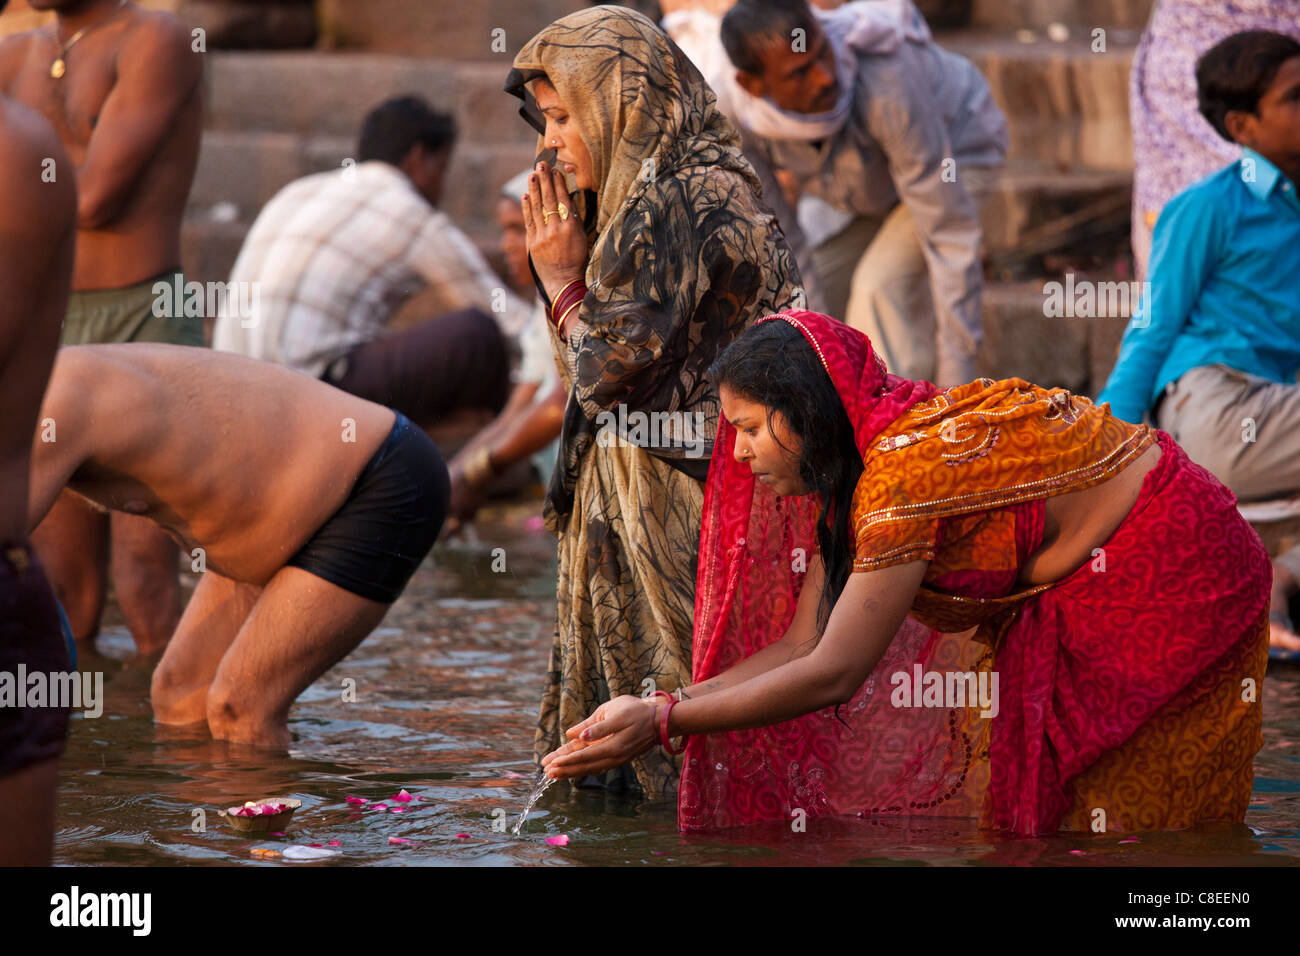 Indian Hindu pilgrim bathing and praying in The Ganges River at Dashashwamedh Ghat in Holy City of Varanasi, India Stock Photo